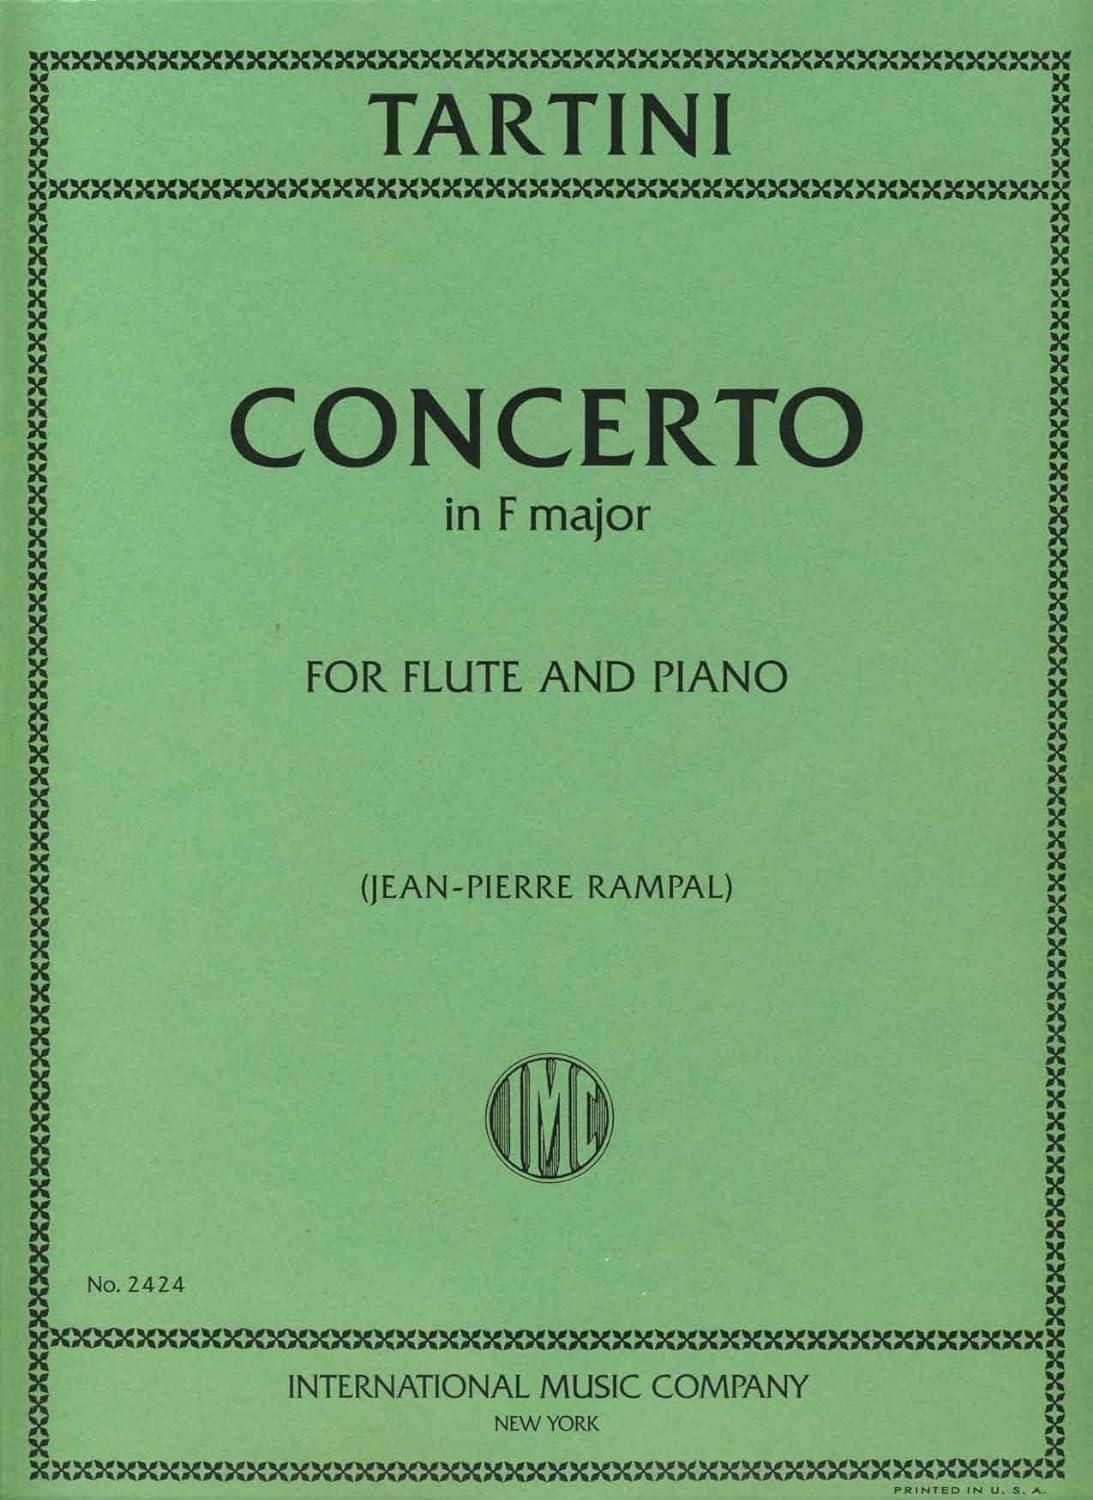 Concerto Fa (Rampal) - Giuseppe Tartini | Suono Flauti